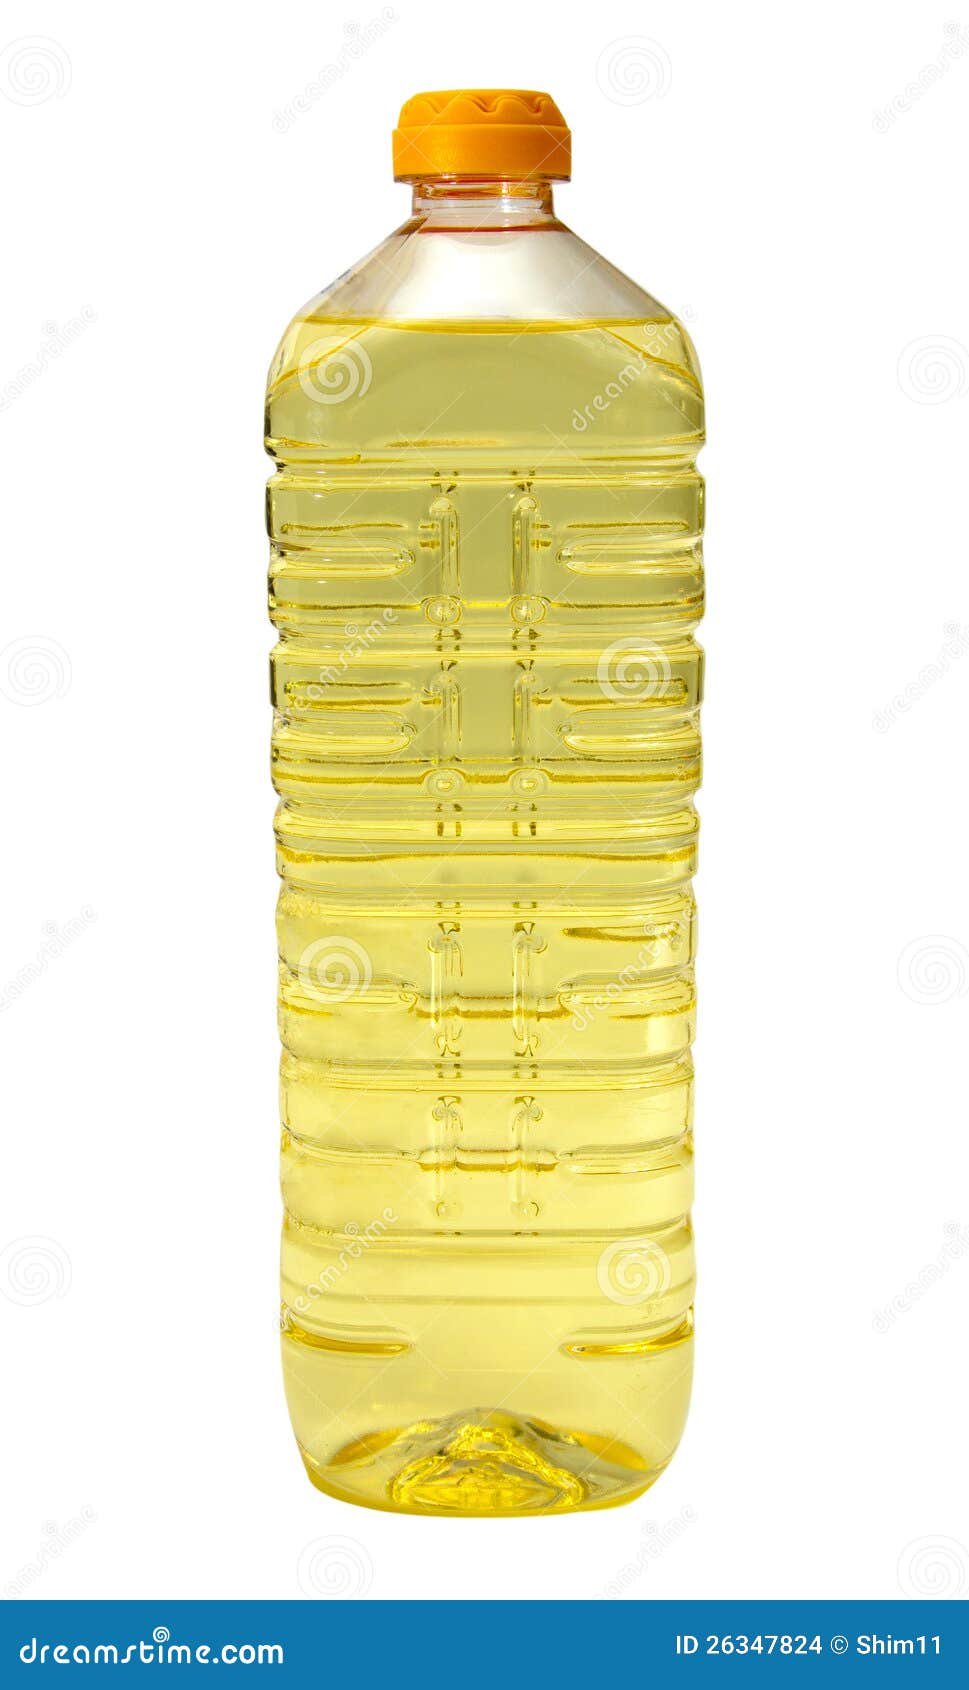 cursief Kennis maken Ga lekker liggen Sunflower Oil in a Plastic Bottle Stock Photo - Image of container, plastic:  26347824